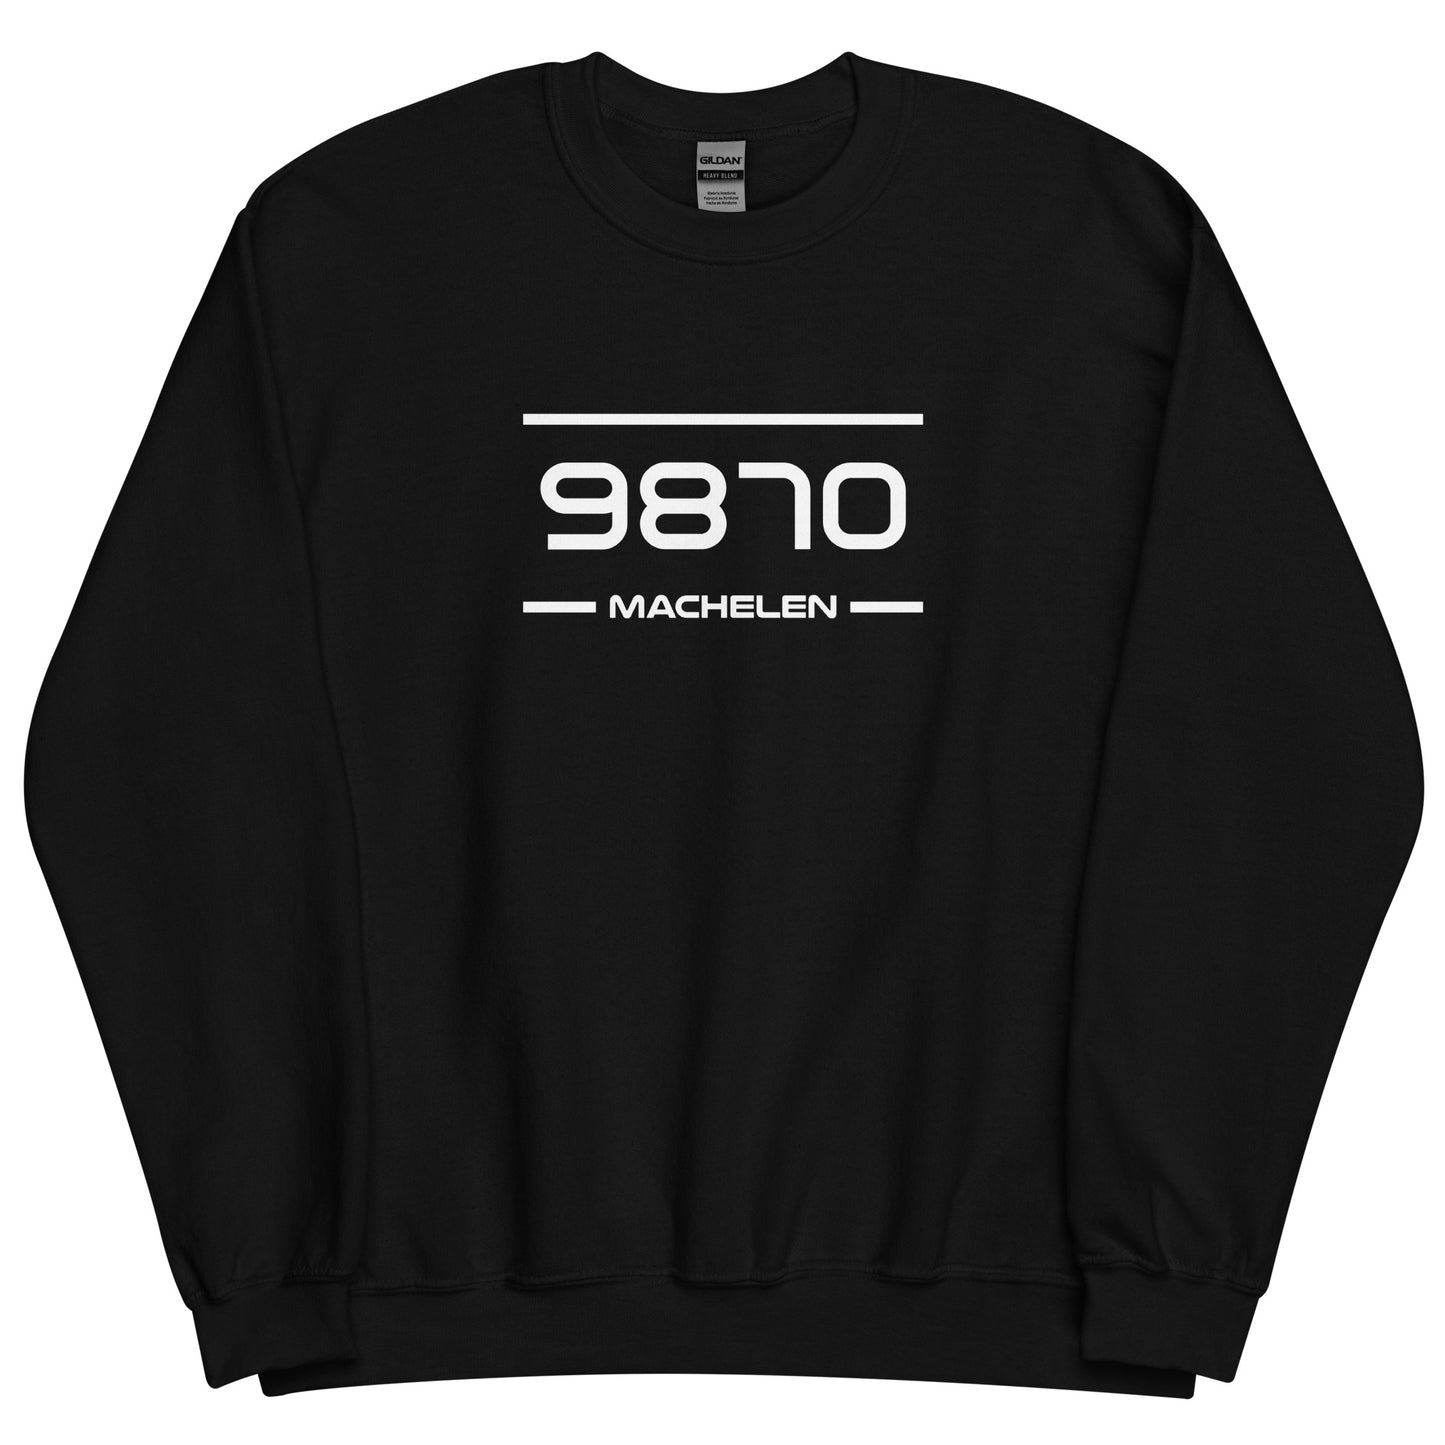 Sweater - 9870 - Machelen (M/V)